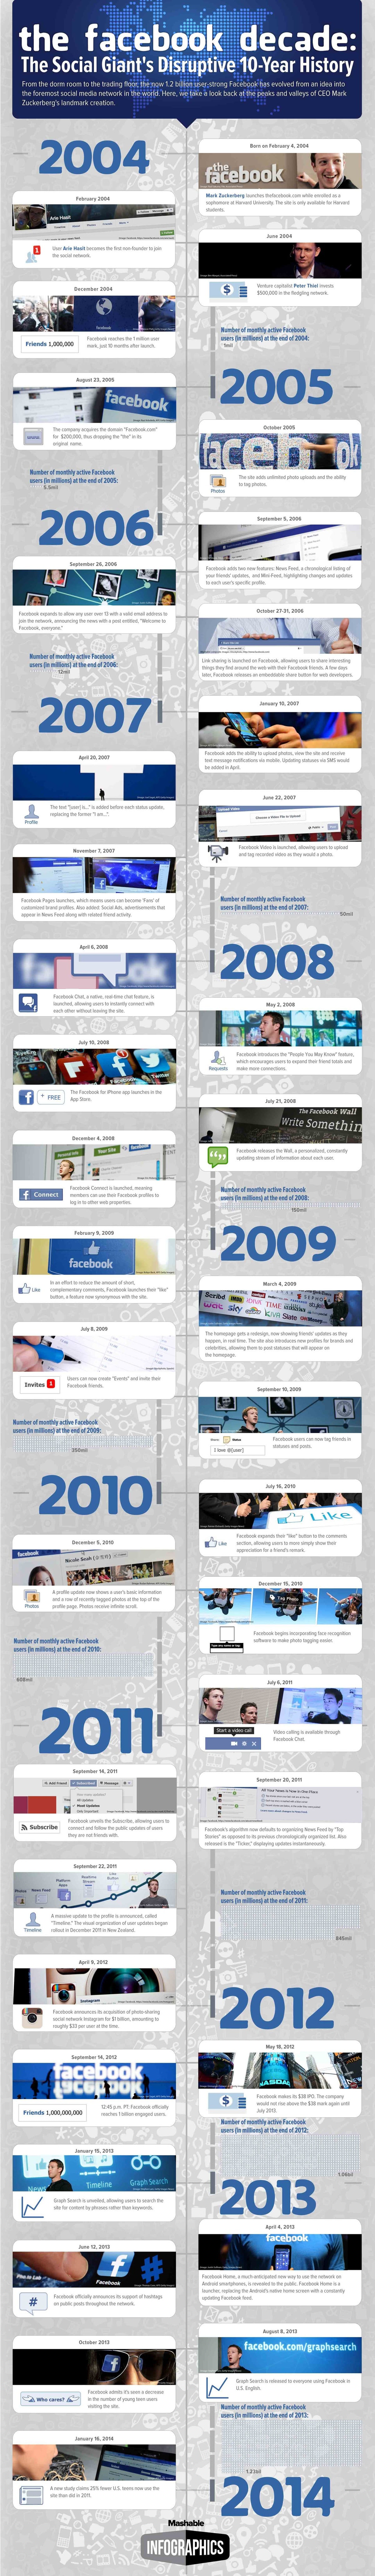 Histoire de Facebook - 10 ans